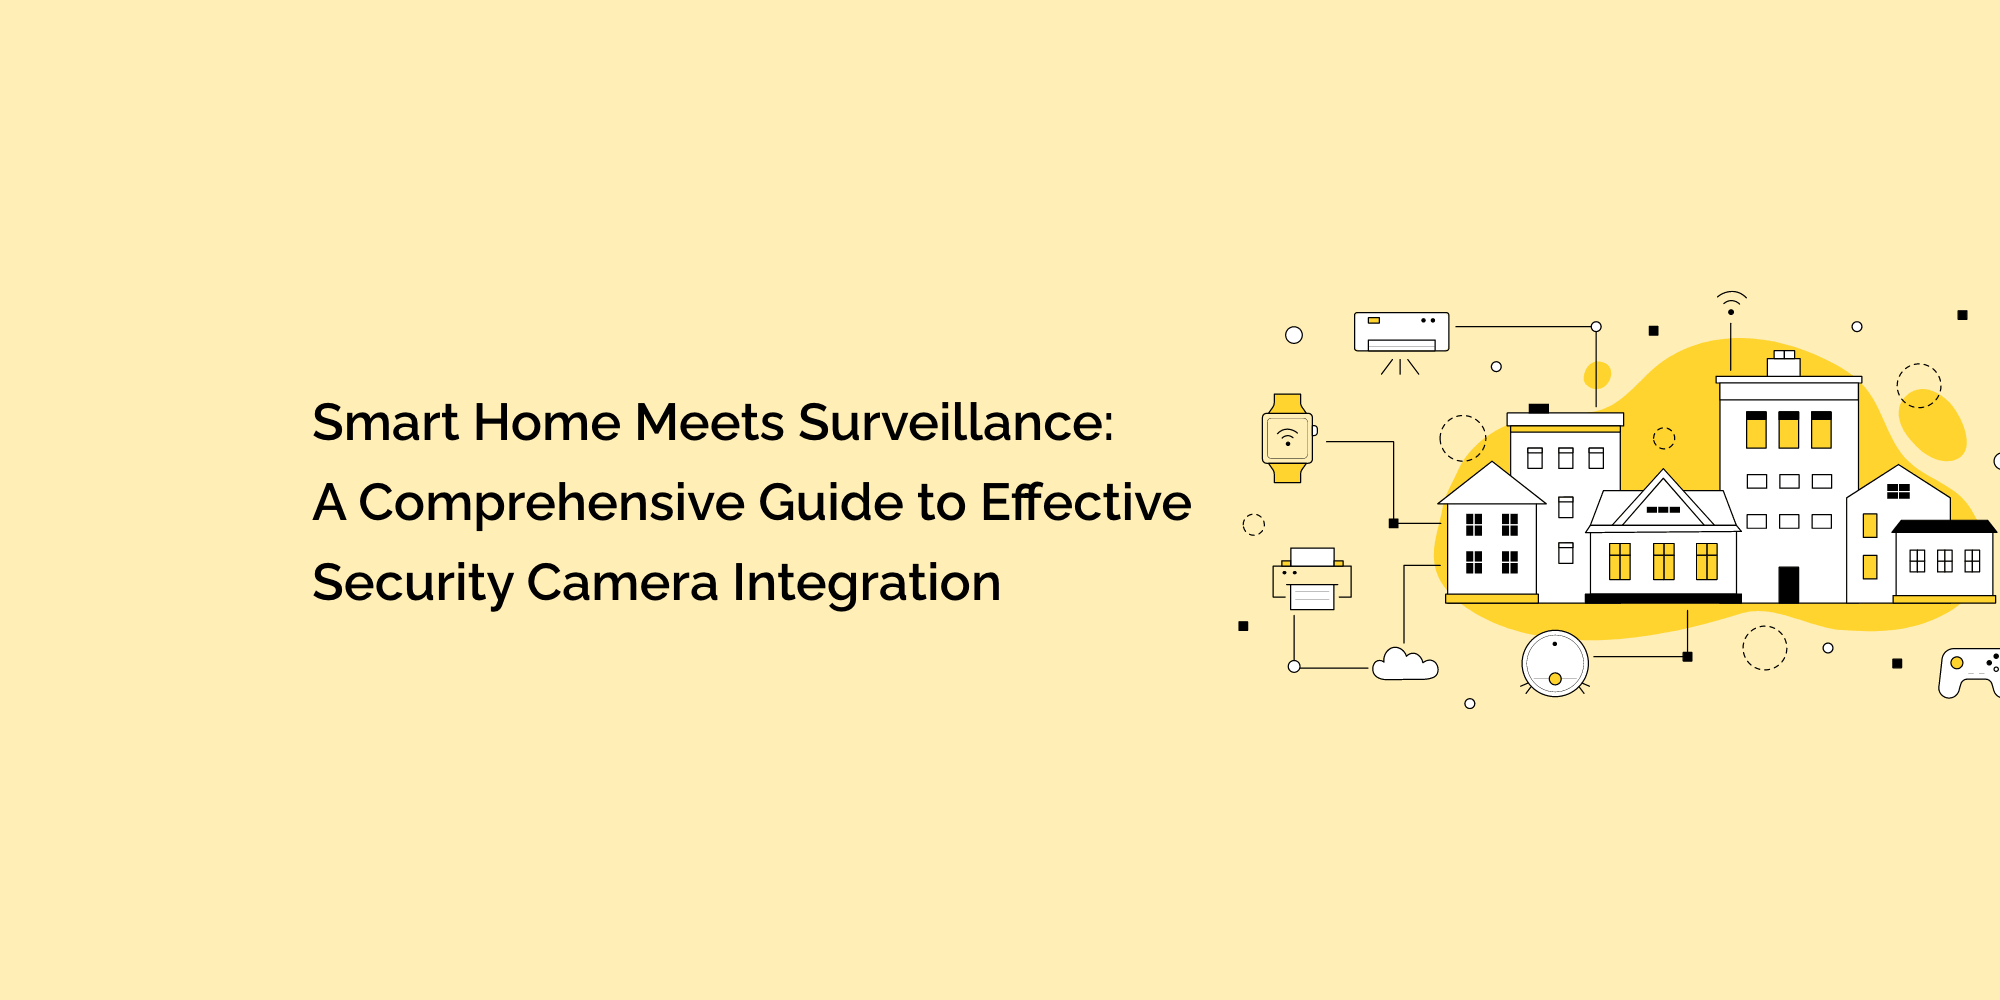 Smart Home Meets Surveillance: A Comprehensive Guide to Effective Security Camera Integration